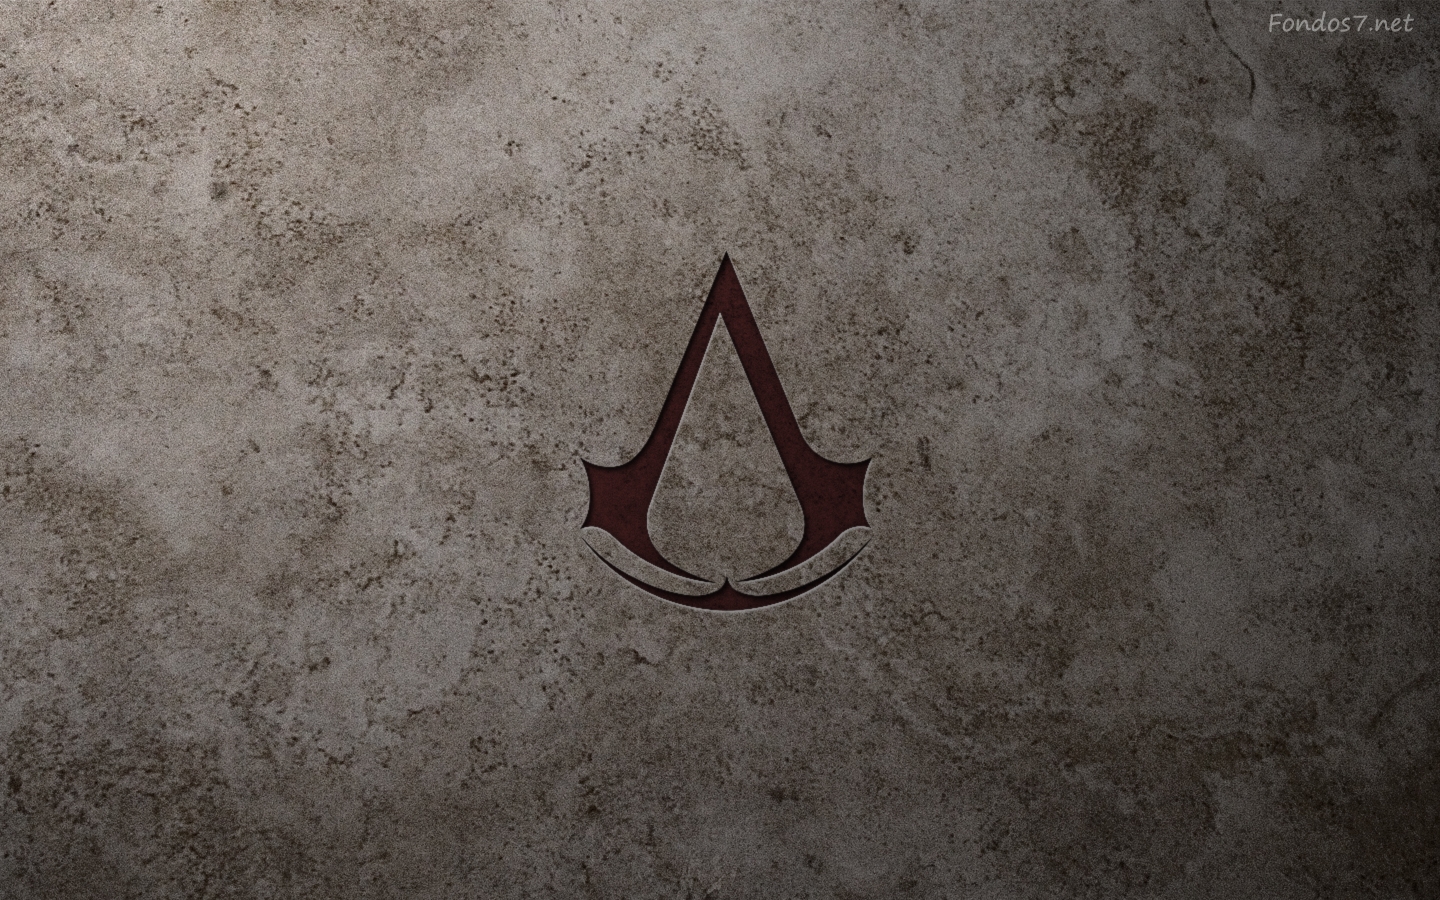 Assassins creed logo 1440x900